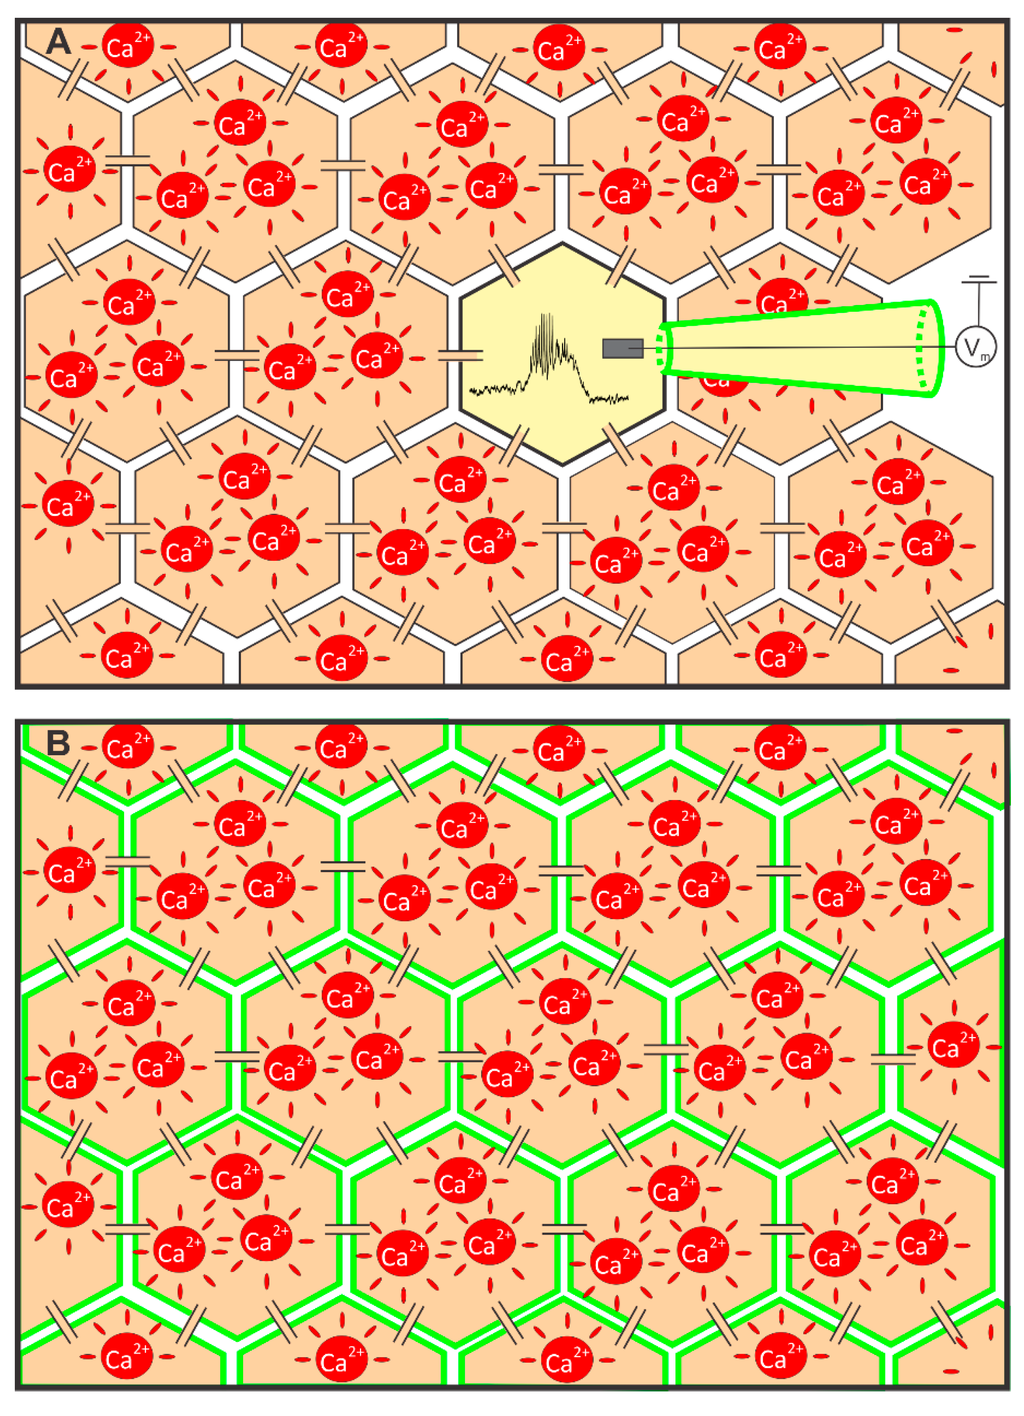 Patch Clamp Technique For Measuring Membrane Potential